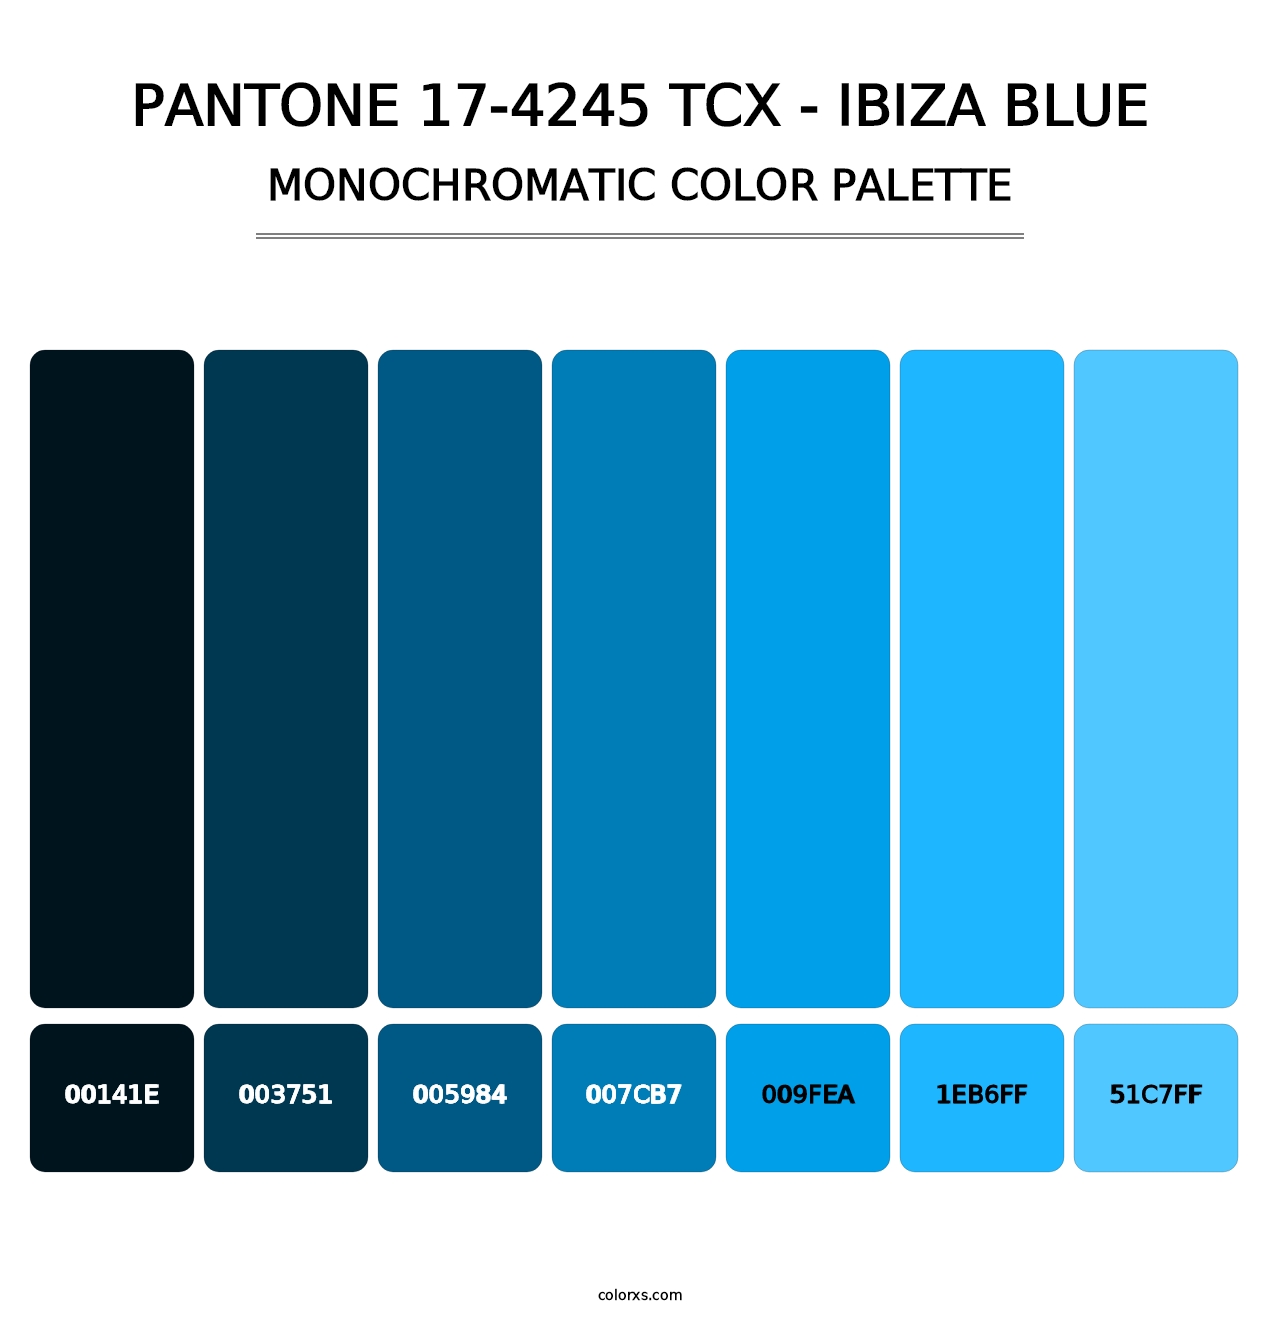 PANTONE 17-4245 TCX - Ibiza Blue - Monochromatic Color Palette